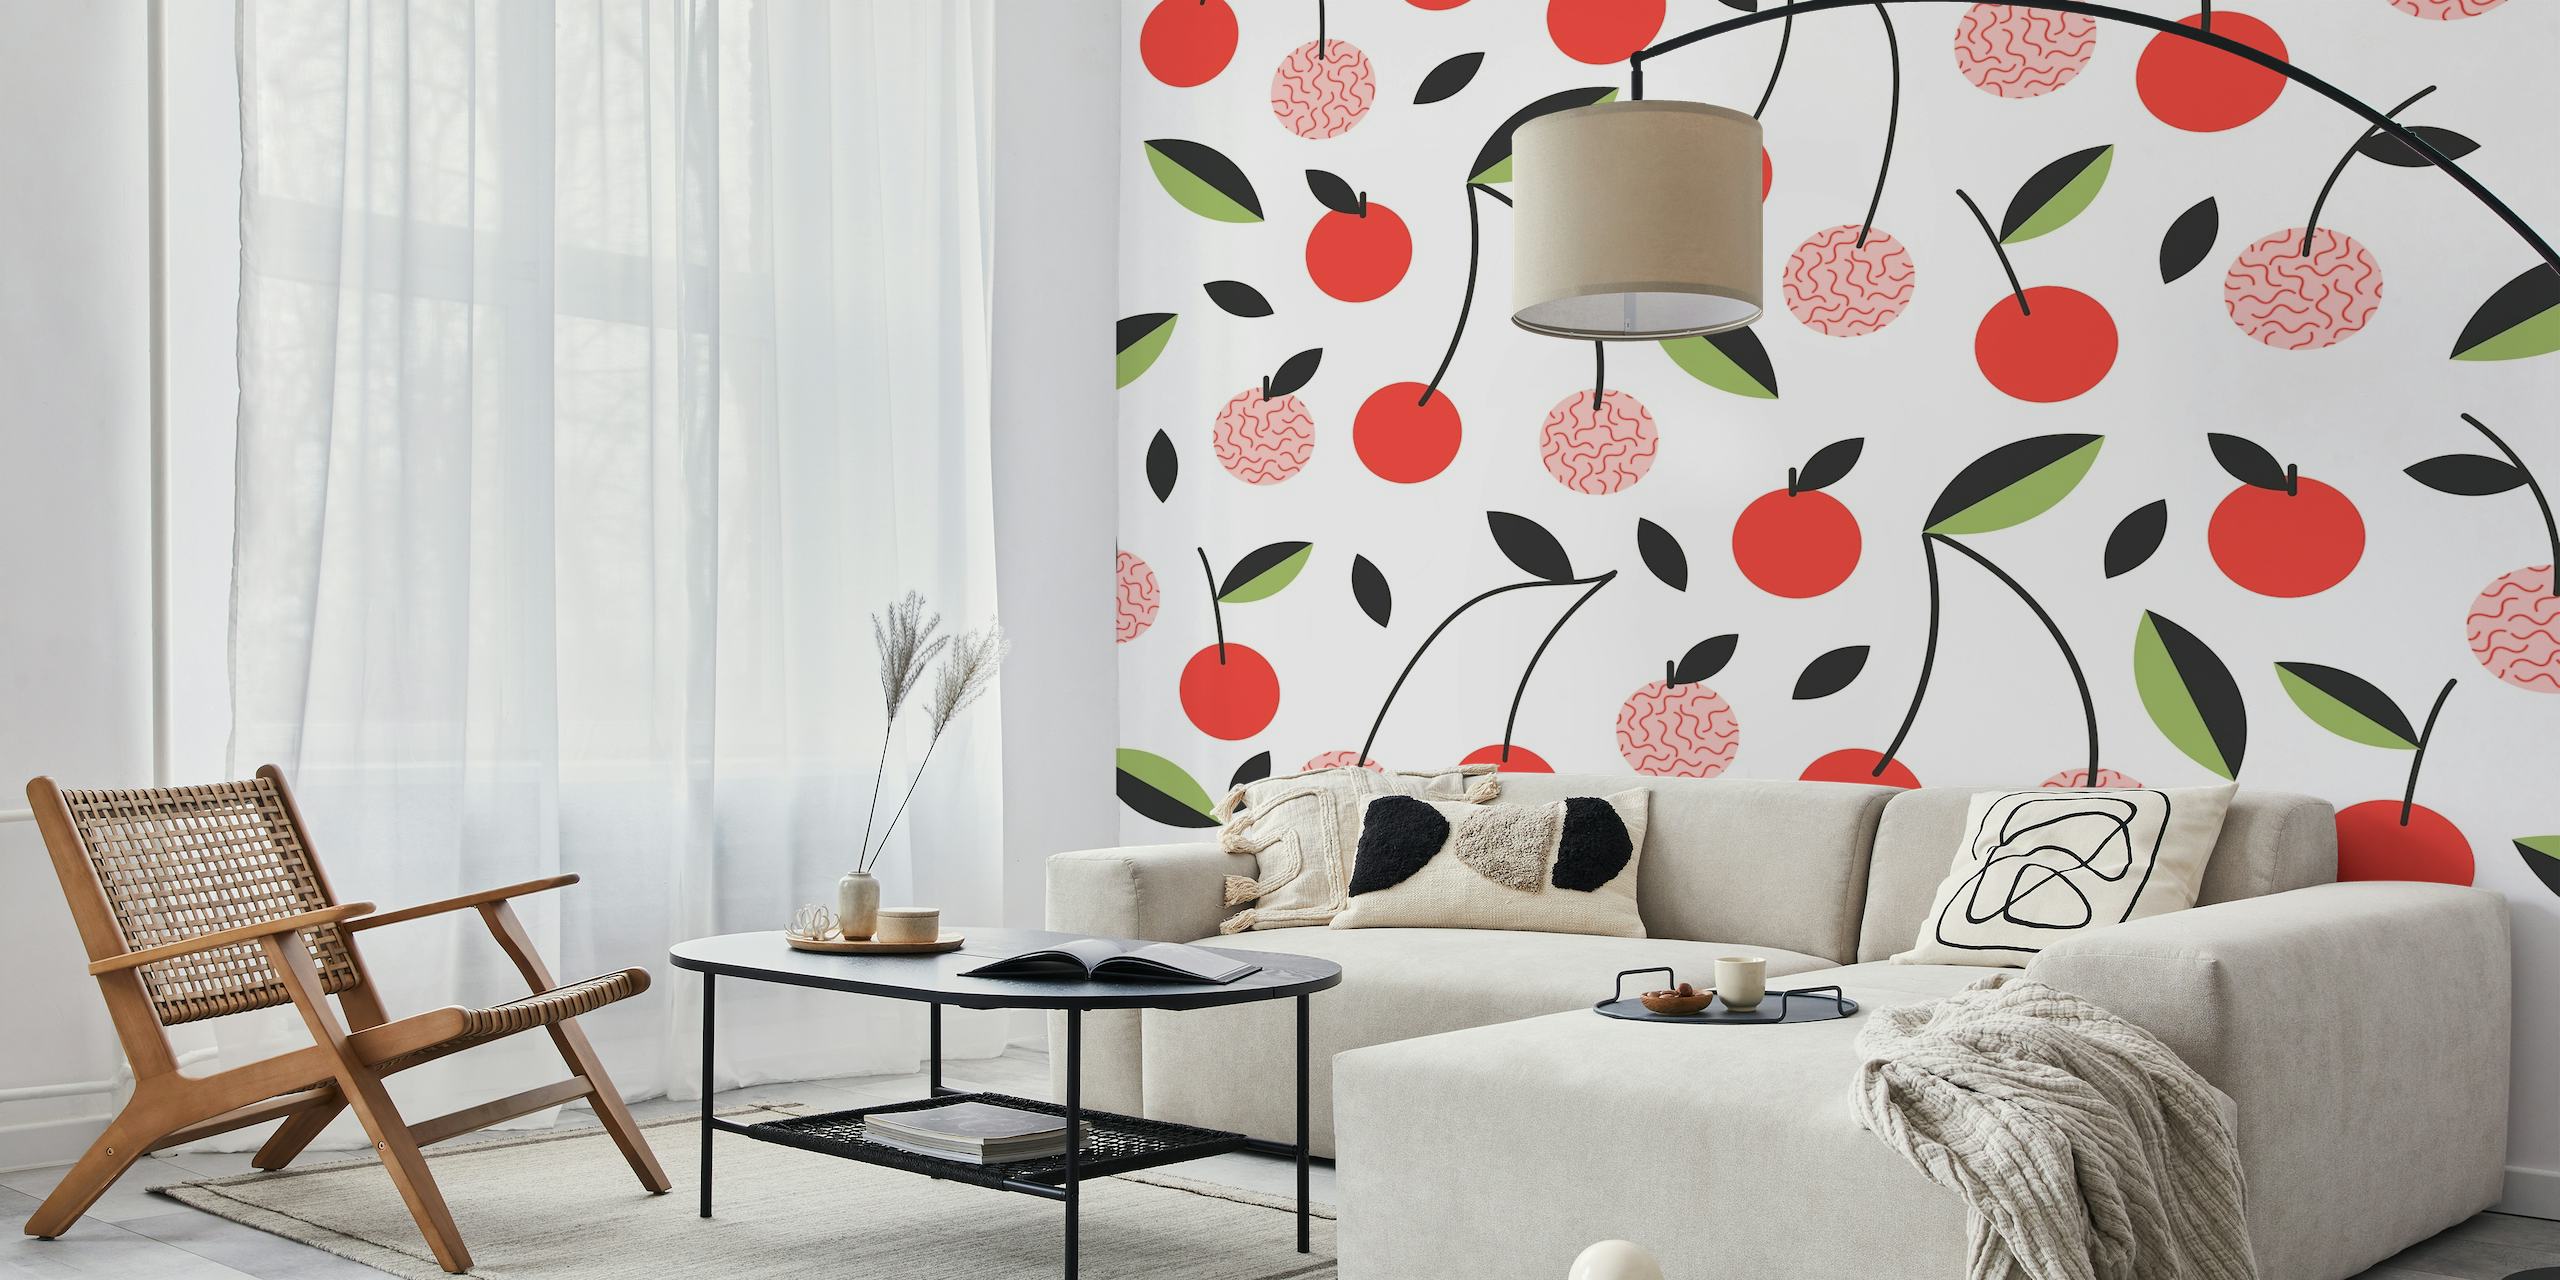 Cherries Red wallpaper